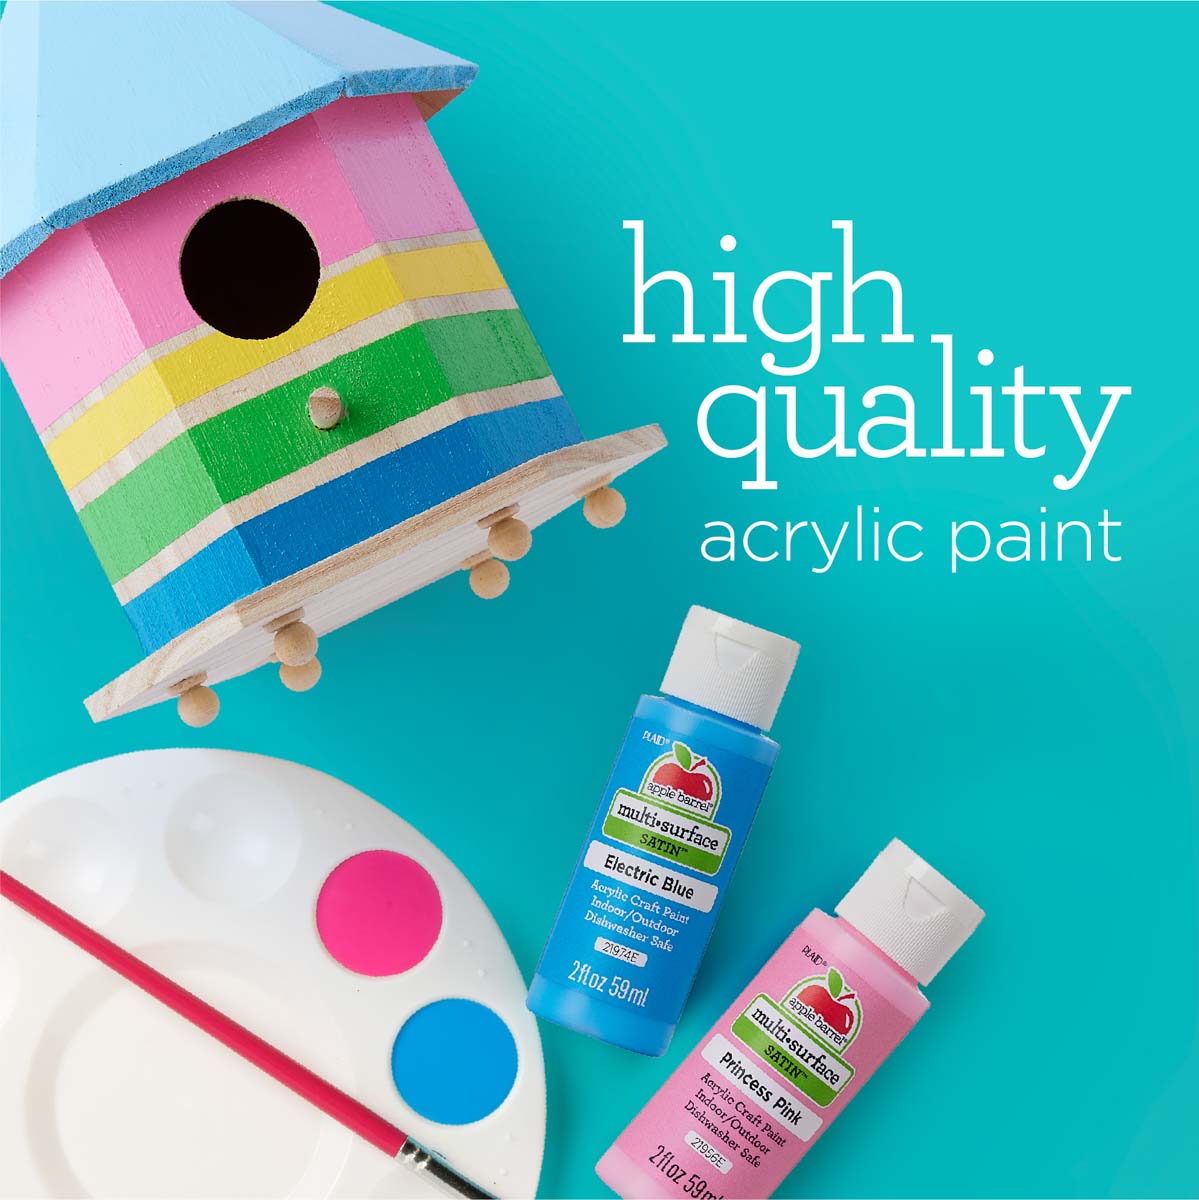 Apple Barrel ® Multi-Surface Satin Acrylic Paints - Mountain Forest, 2 oz. - 21970E